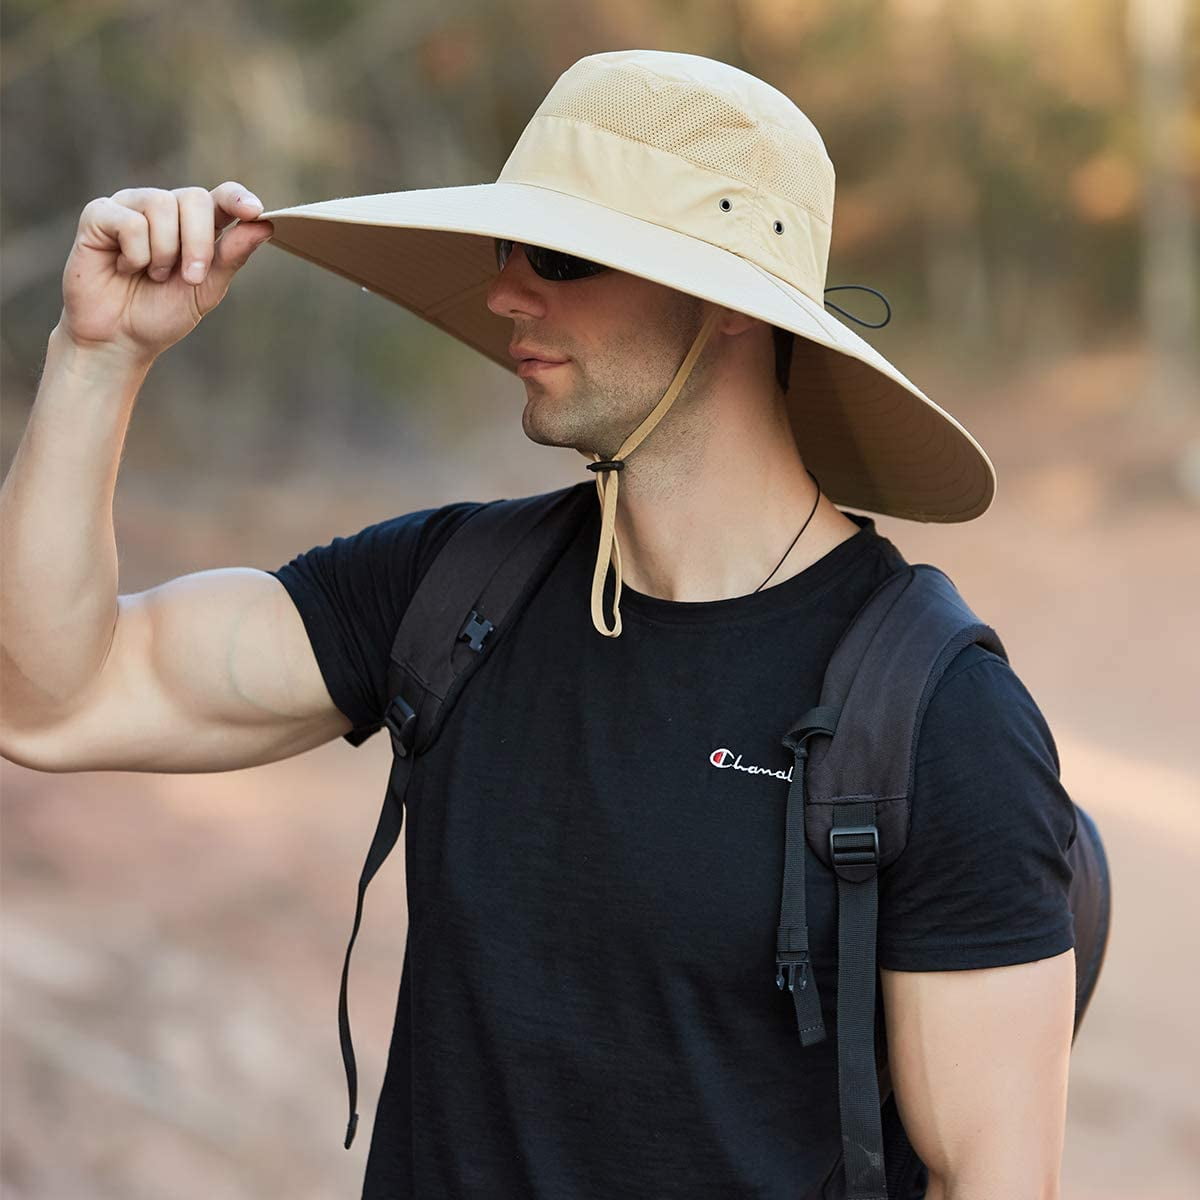 Leotruny Super Wide Brim Bucket Hat UPF50 Waterproof Sun Hat for Fishing Hiking Camping 